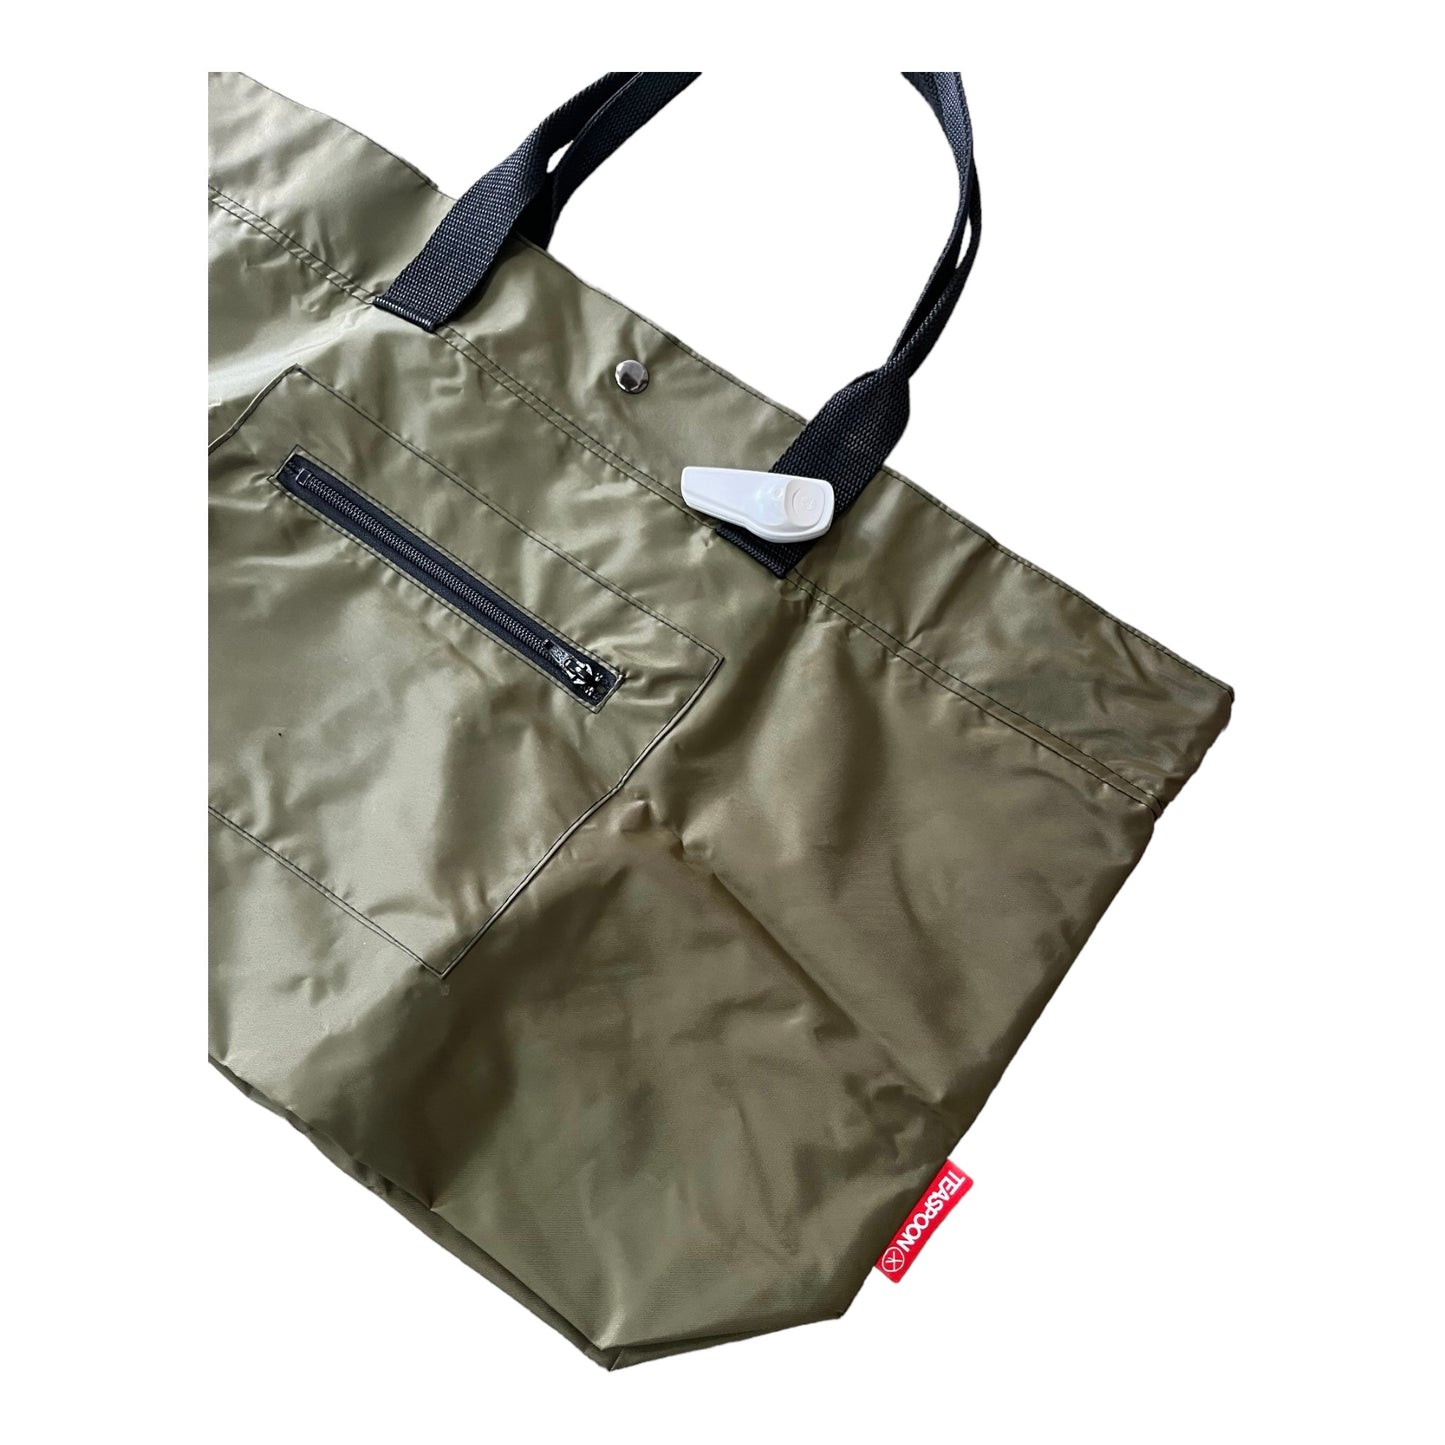 Super Bag [ 100% Nylon ] Waterproof